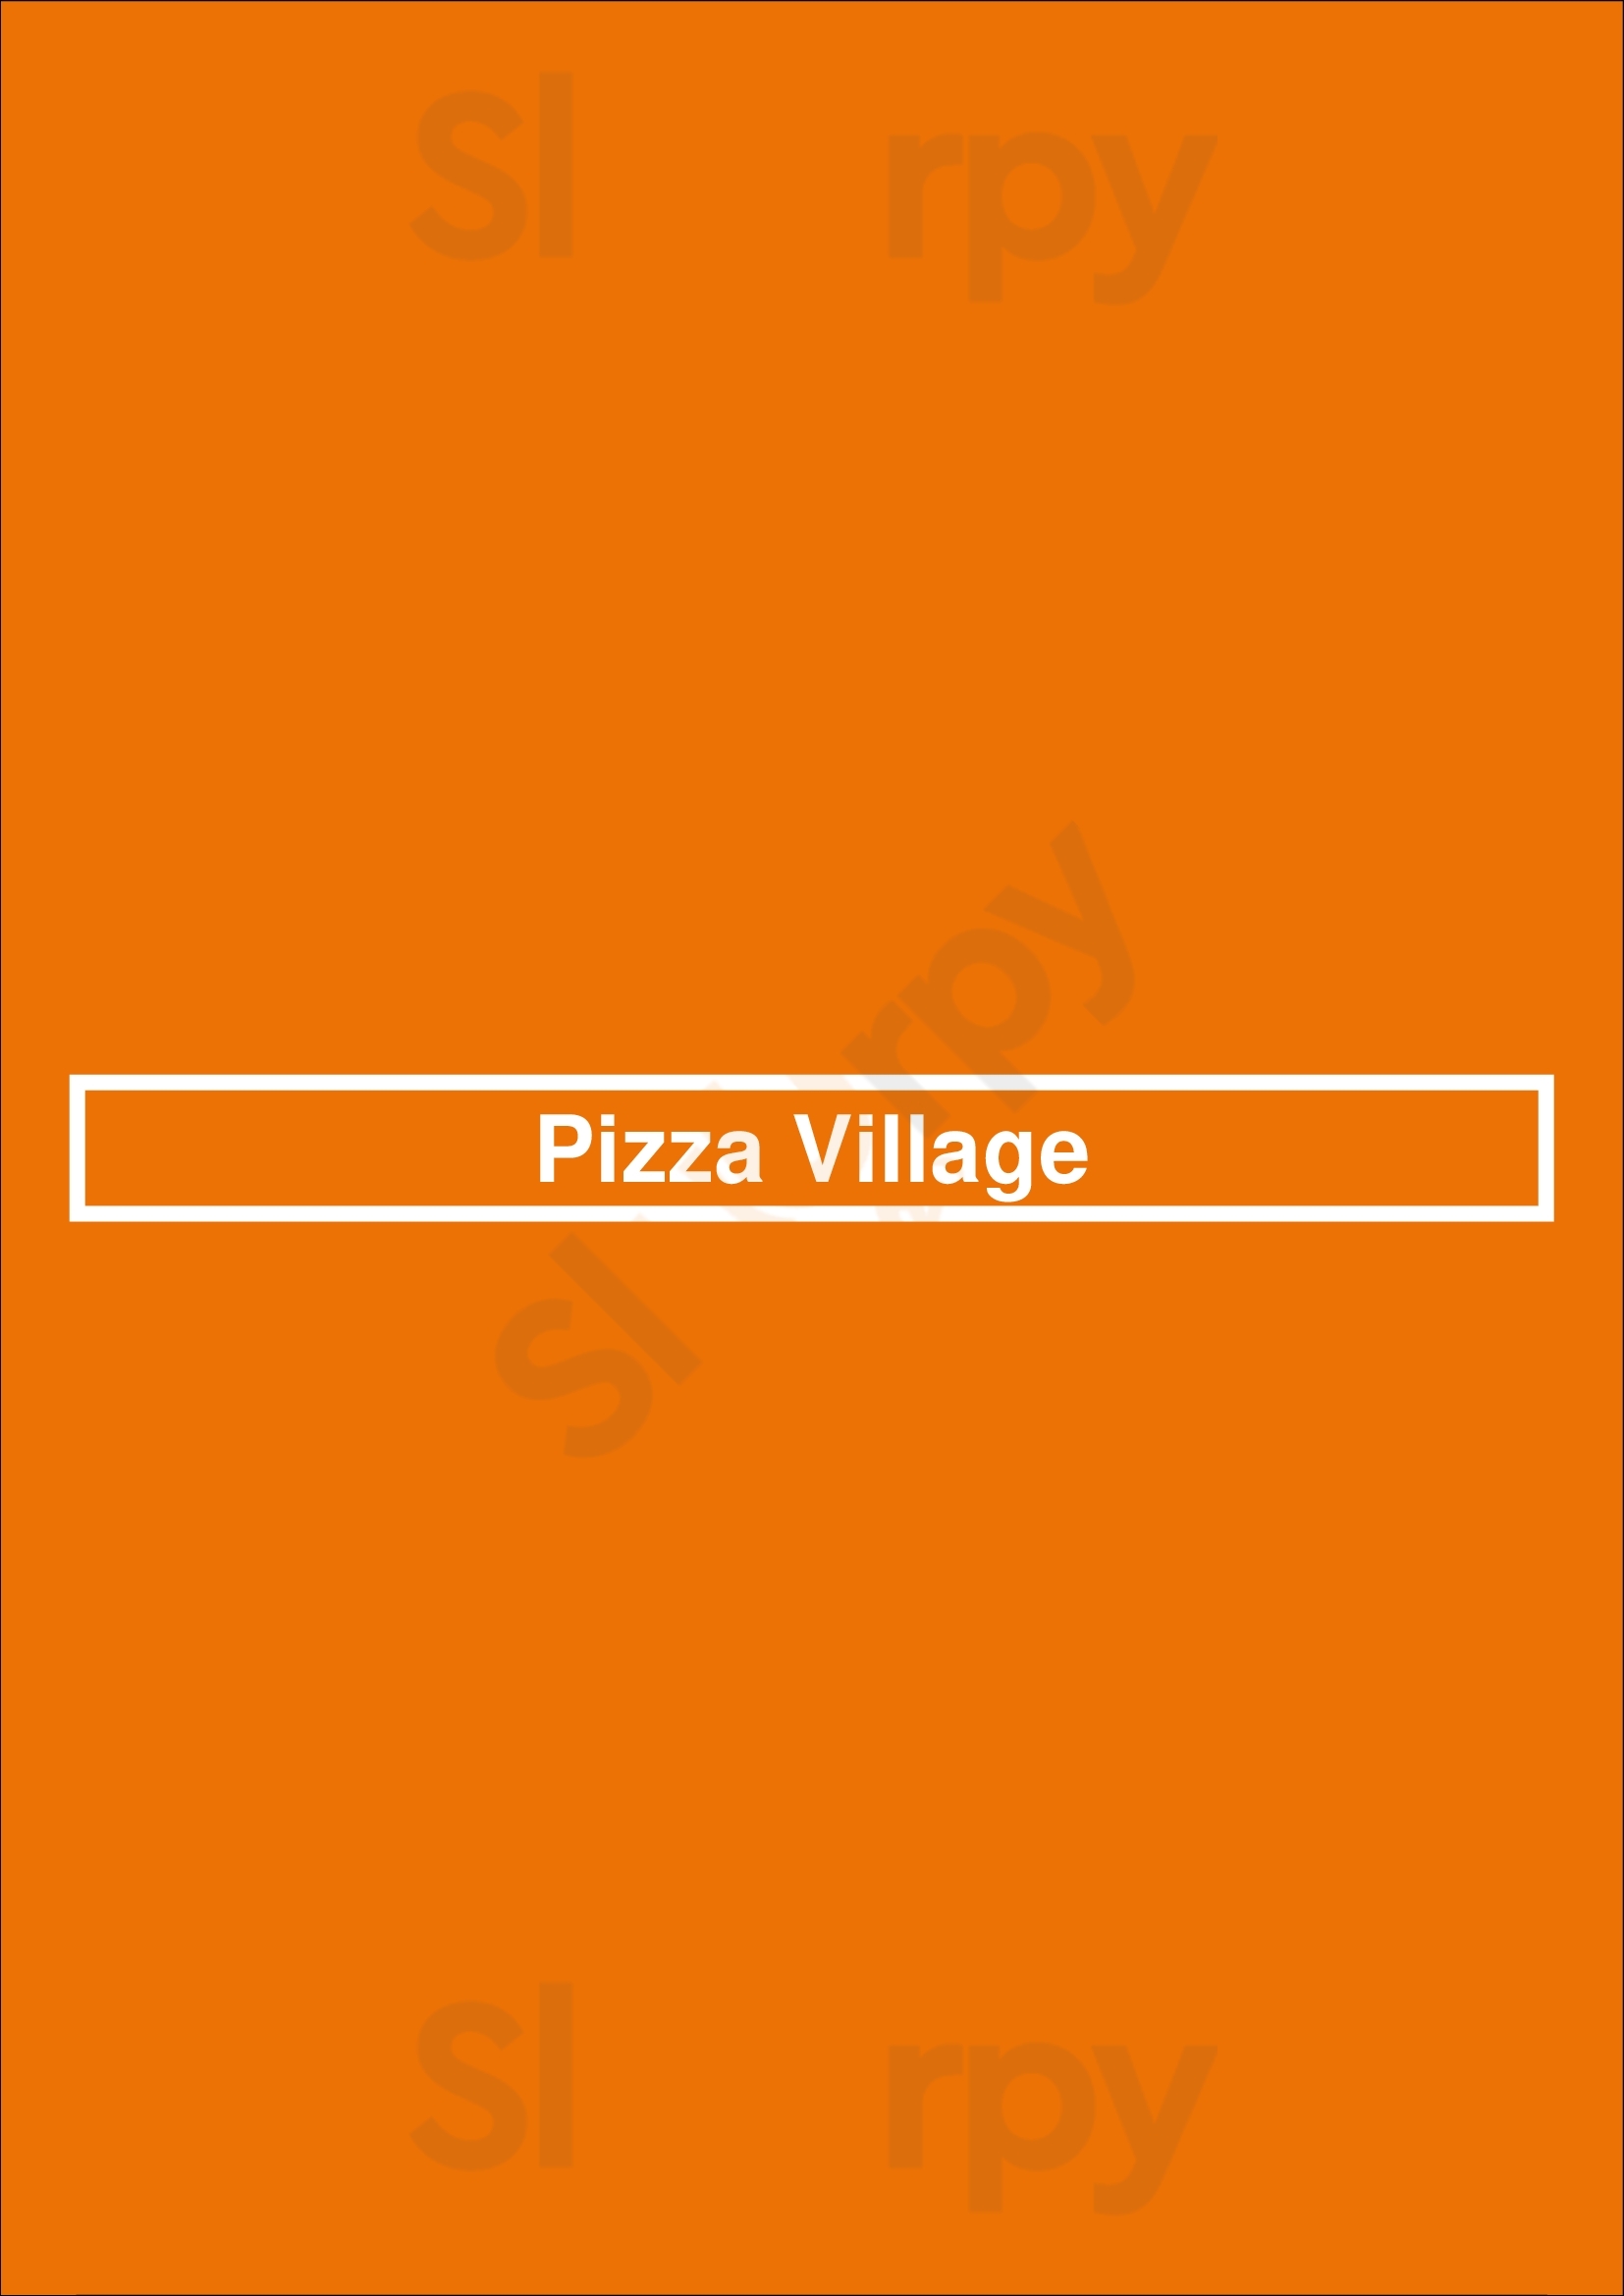 Pizza Village London Menu - 1